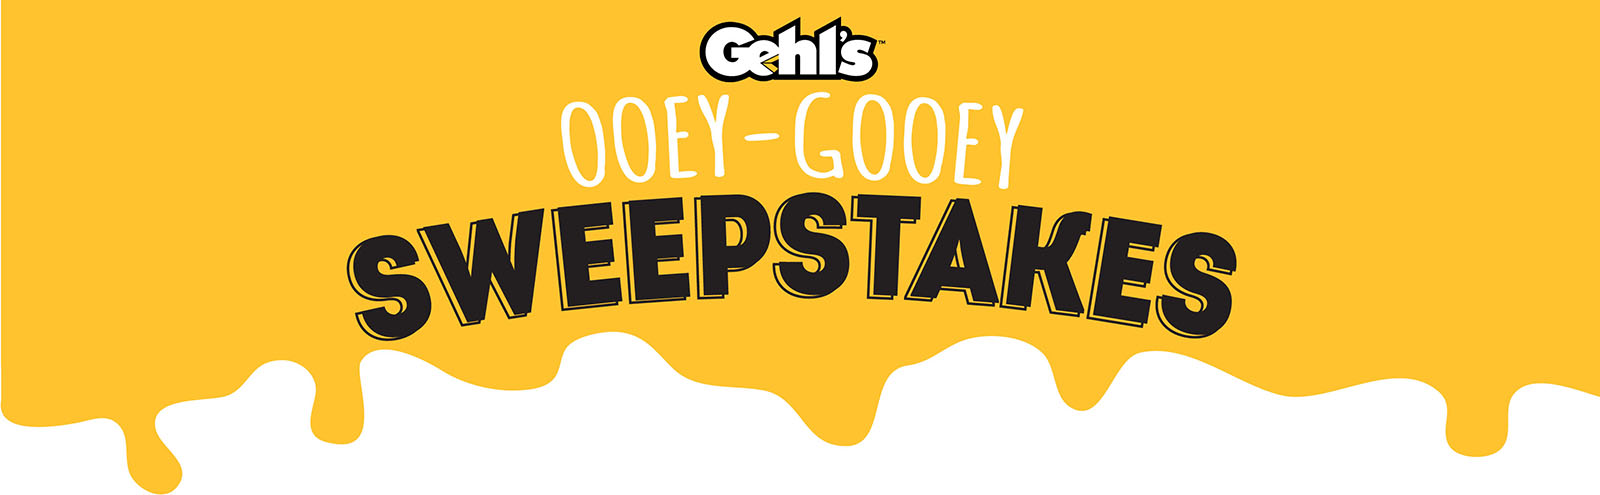 Gehl's Ooey-Gooey Sweepstakes